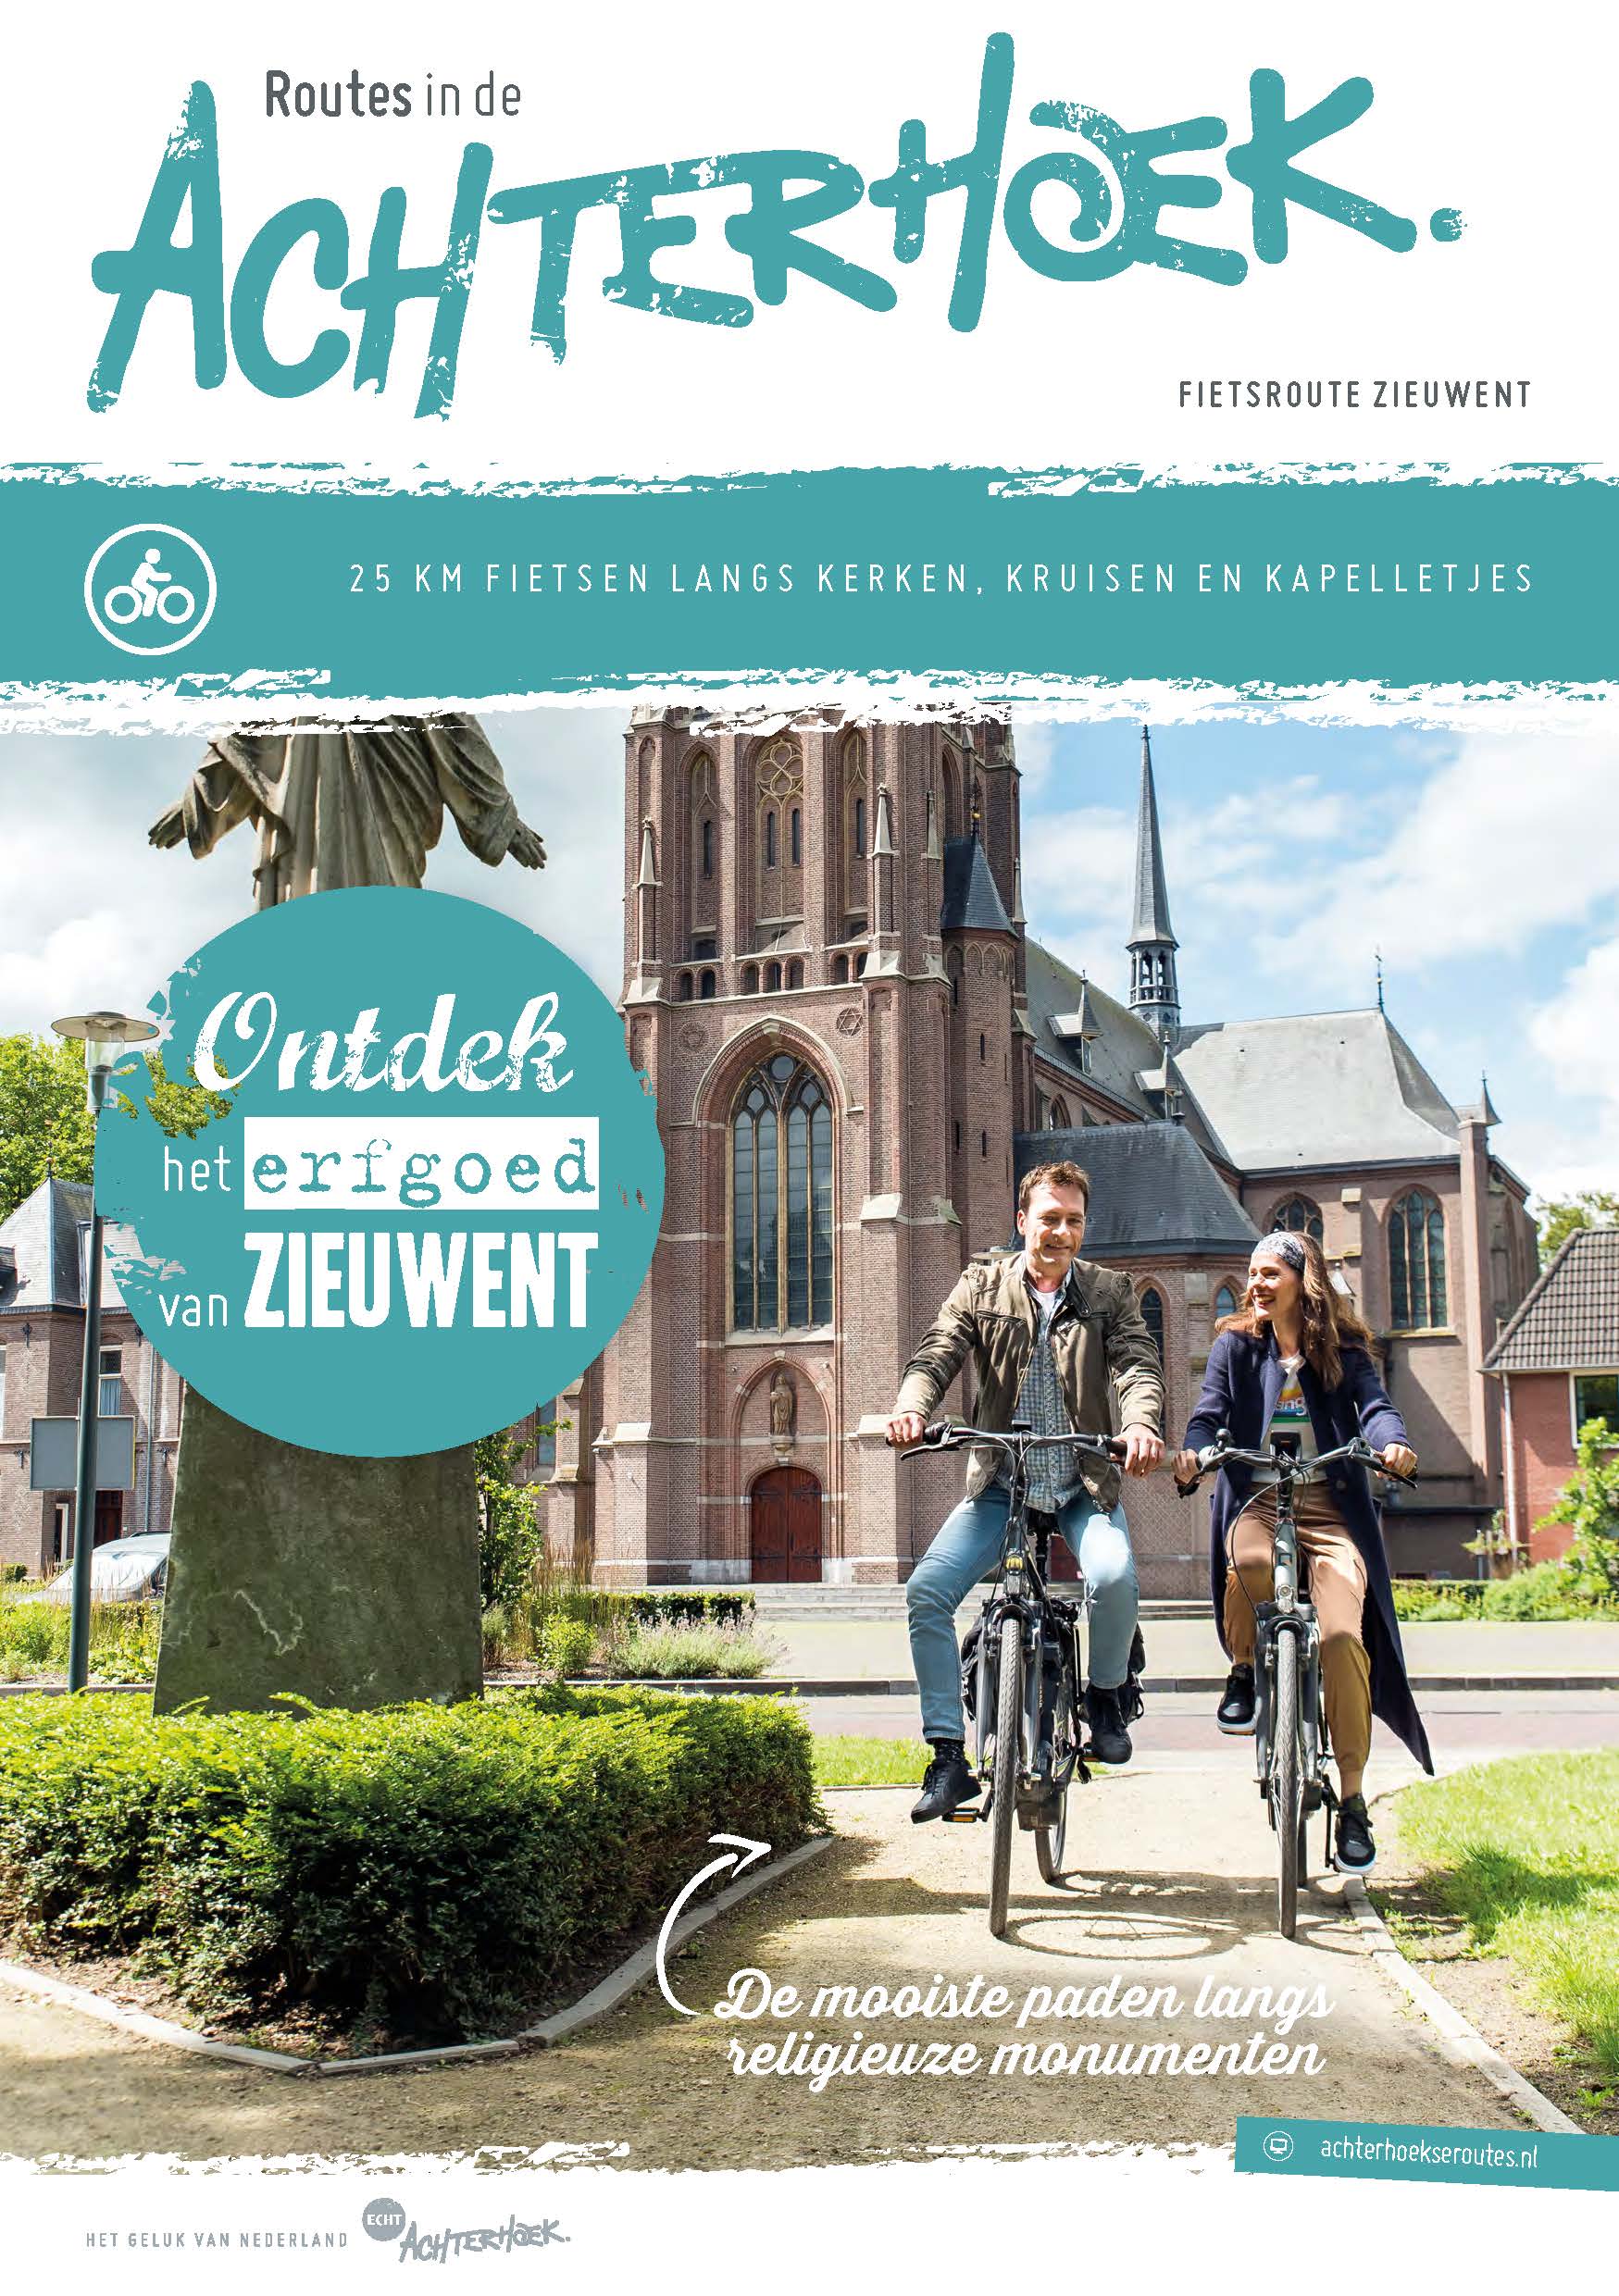 Beschreven fietsroute; Langs kerken, kruisen en kapelletjes